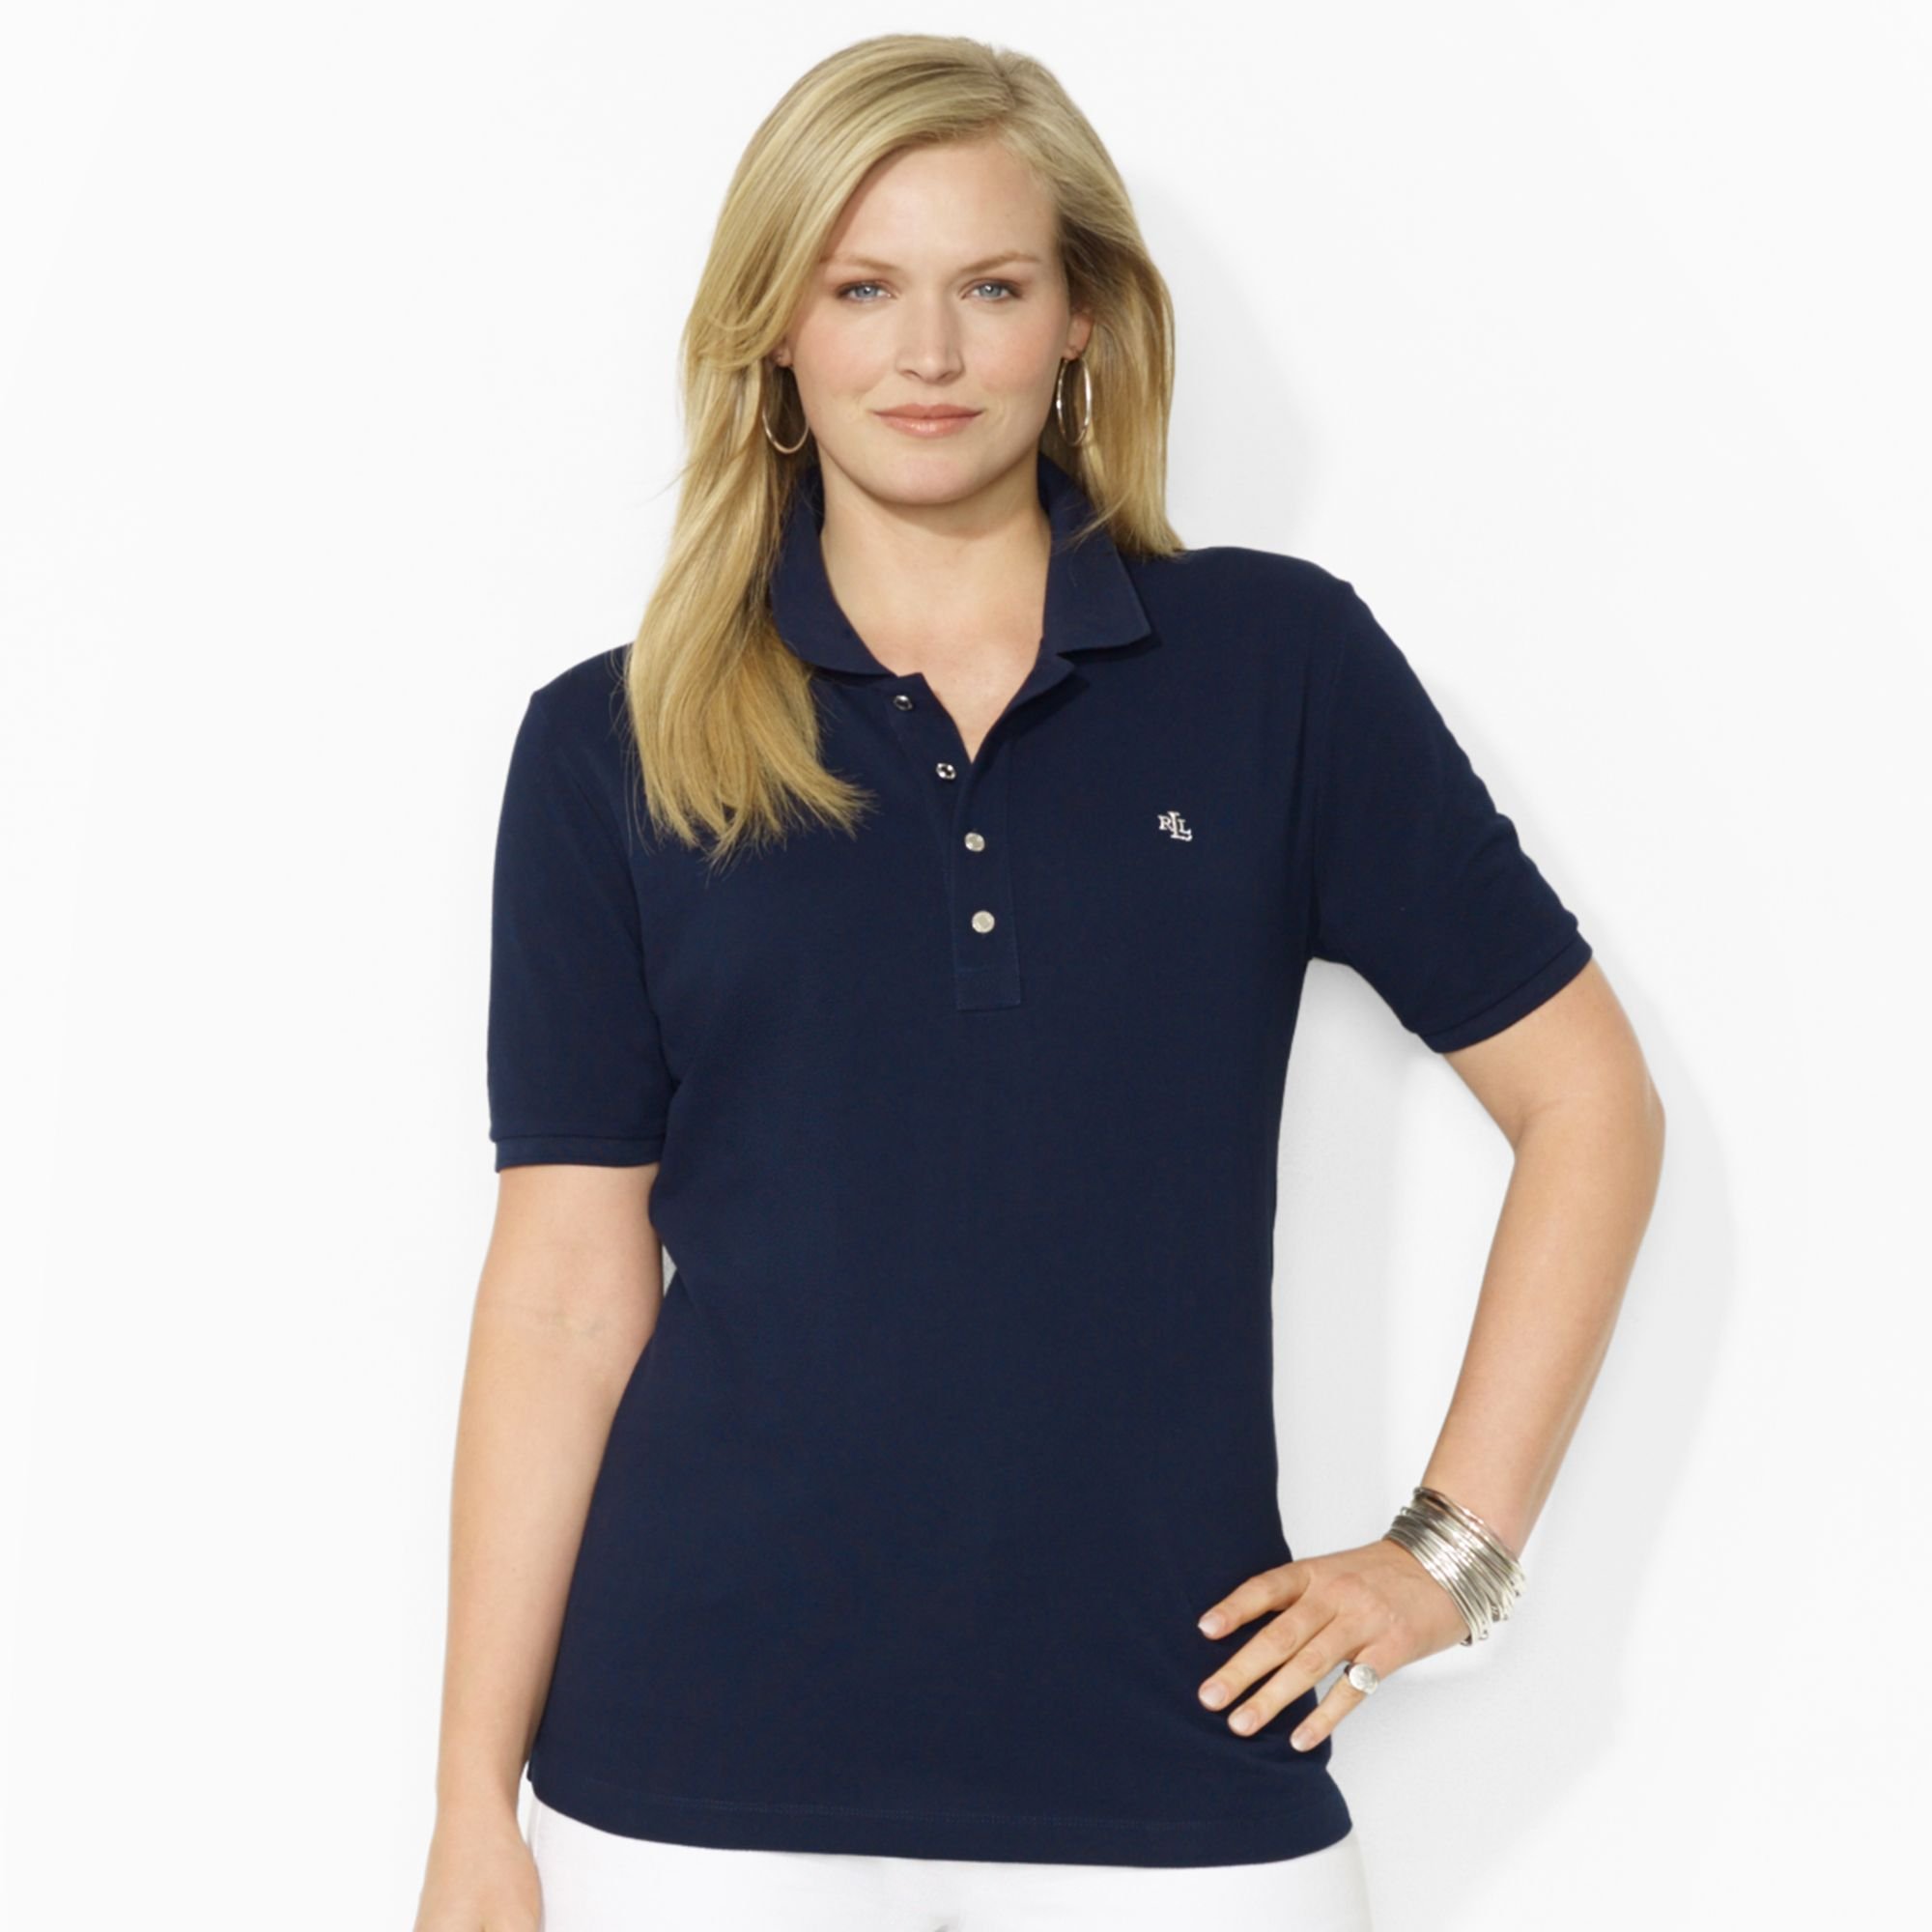 ralph lauren women's plus size polo shirts